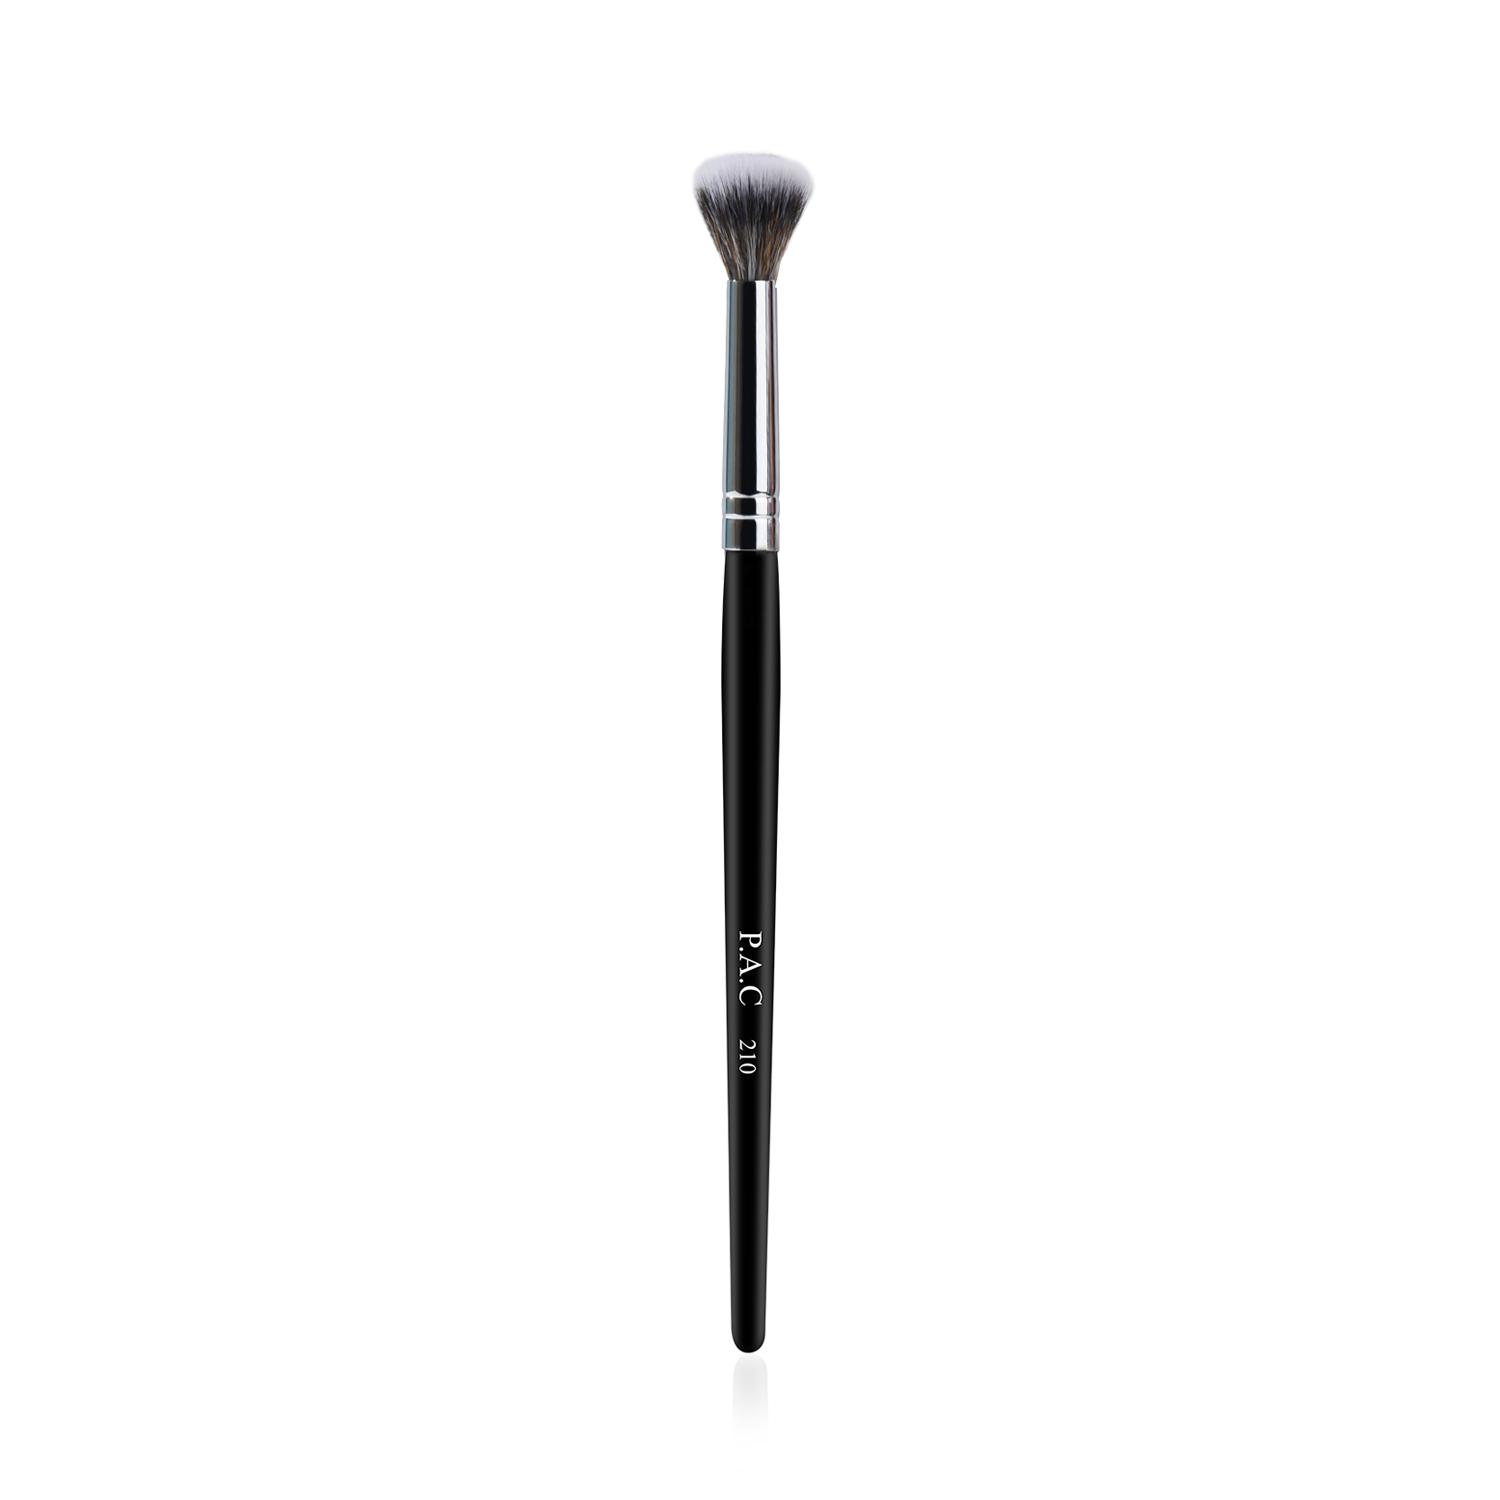 PAC | PAC Eyeshadow Blending Brush - 210 (1Pc)